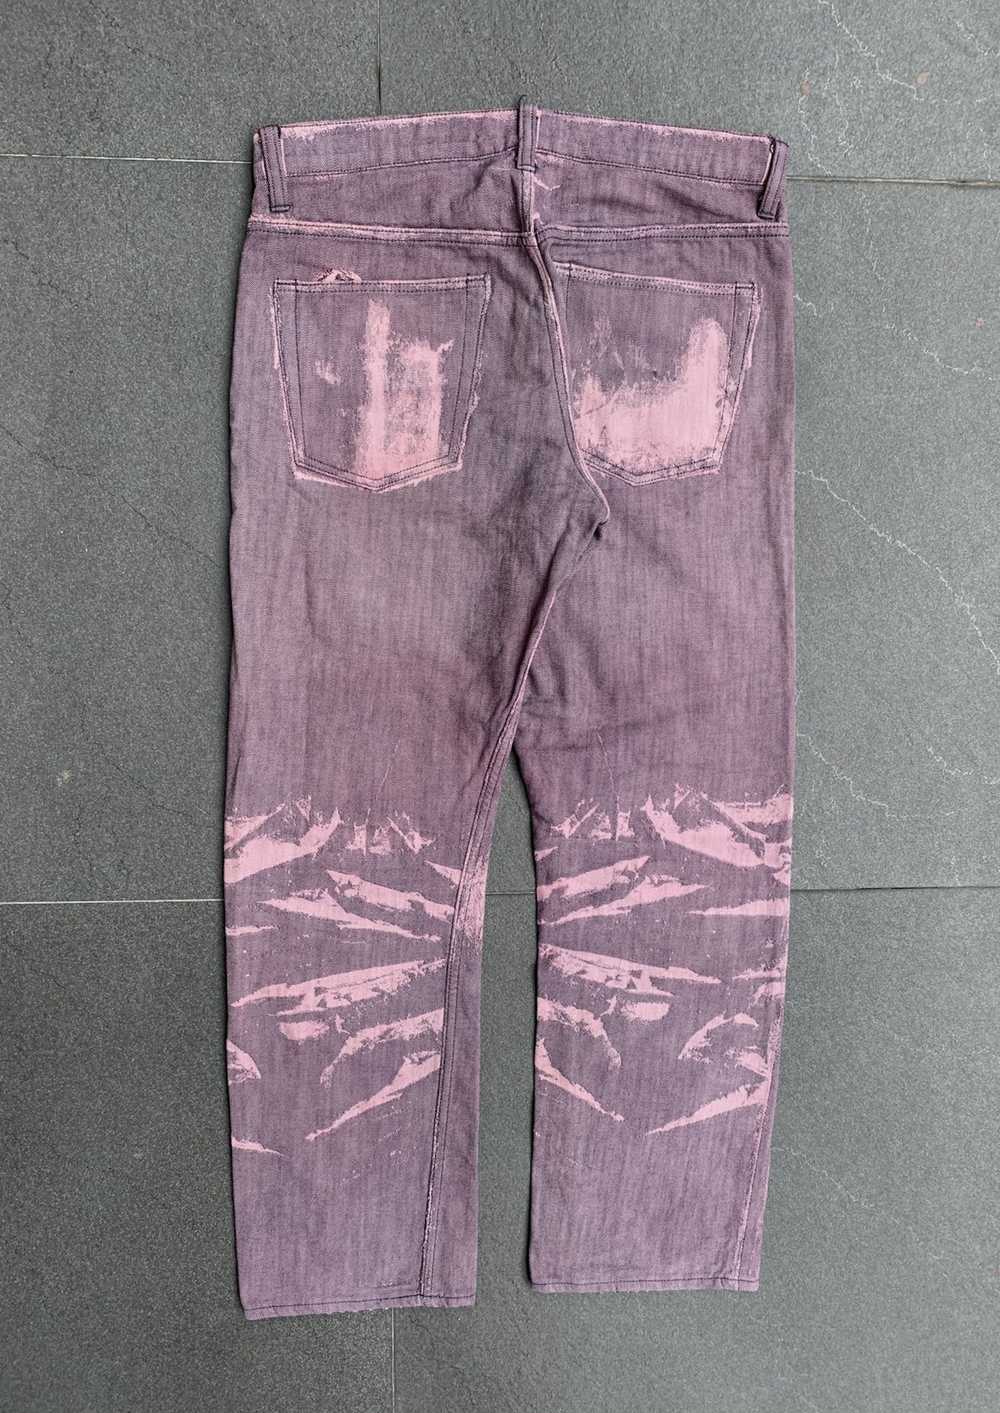 Issey Miyake APOC Galaxy Purple Denim Jeans - image 6